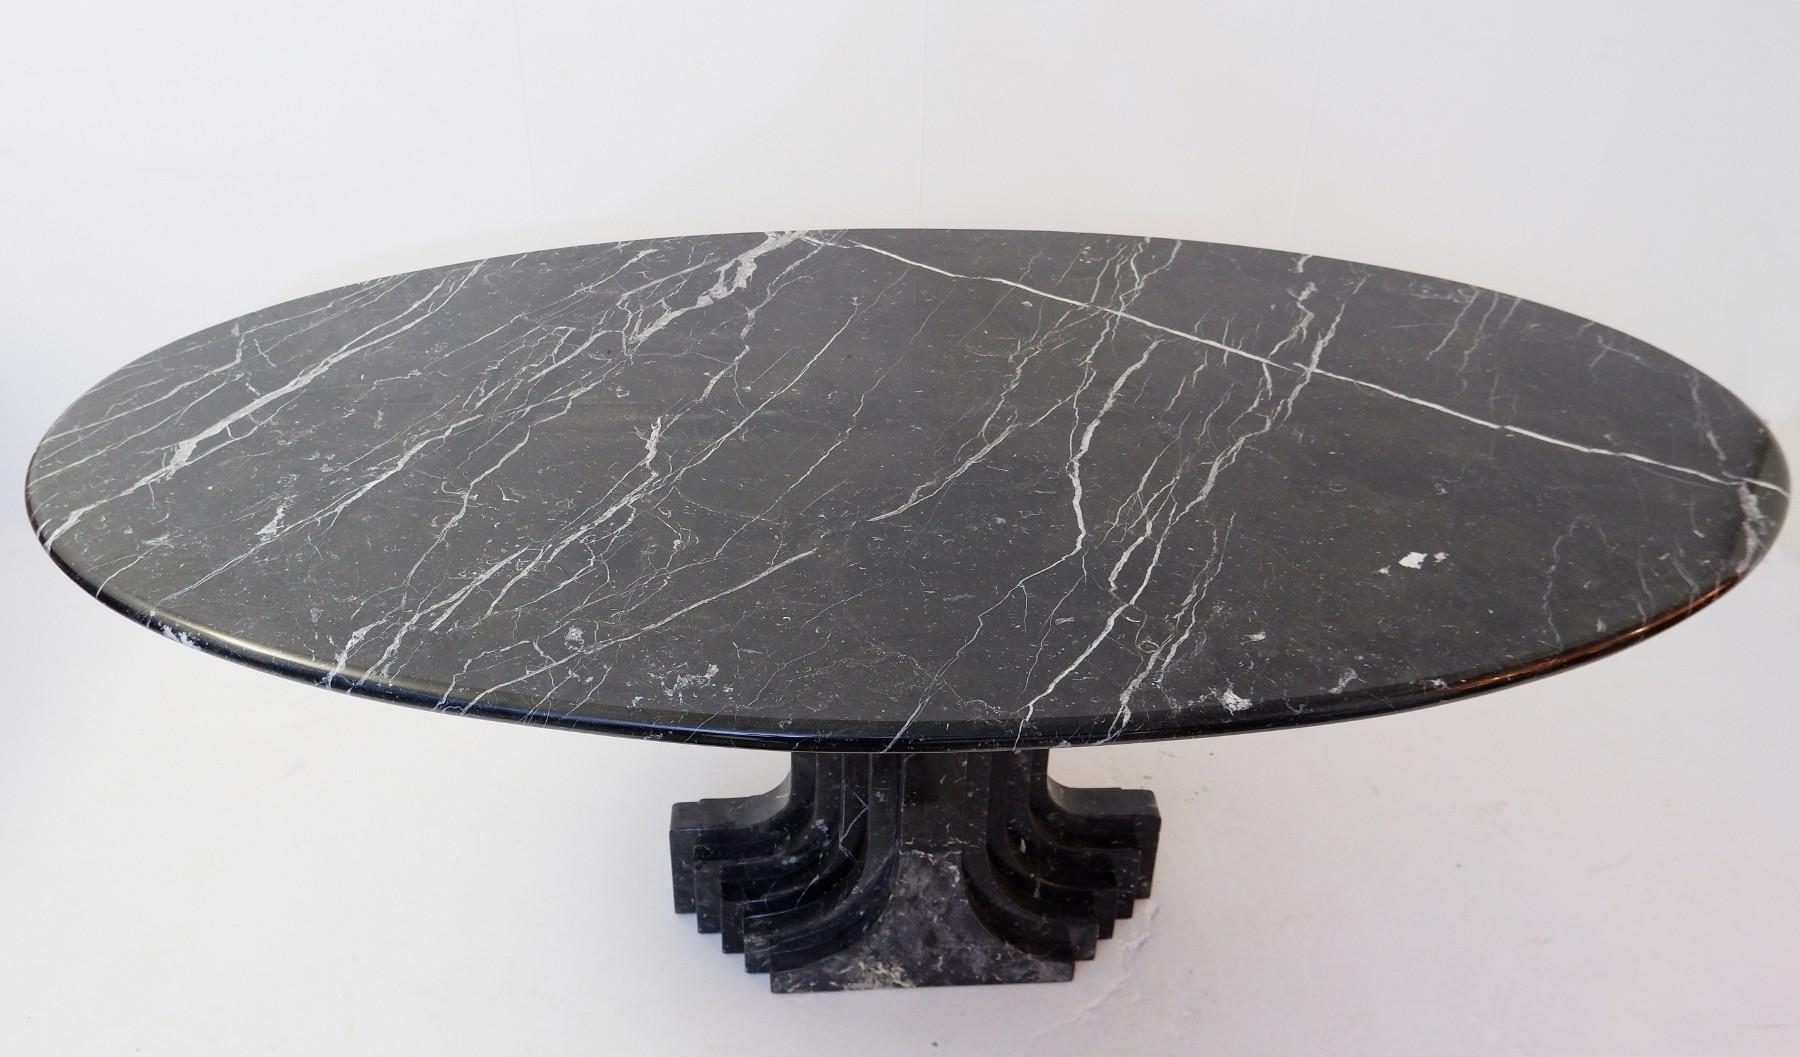 Italian Mid-Century Modern Dining Table 'Samo' by Carlo Scarpa, Black Marble, Italy 